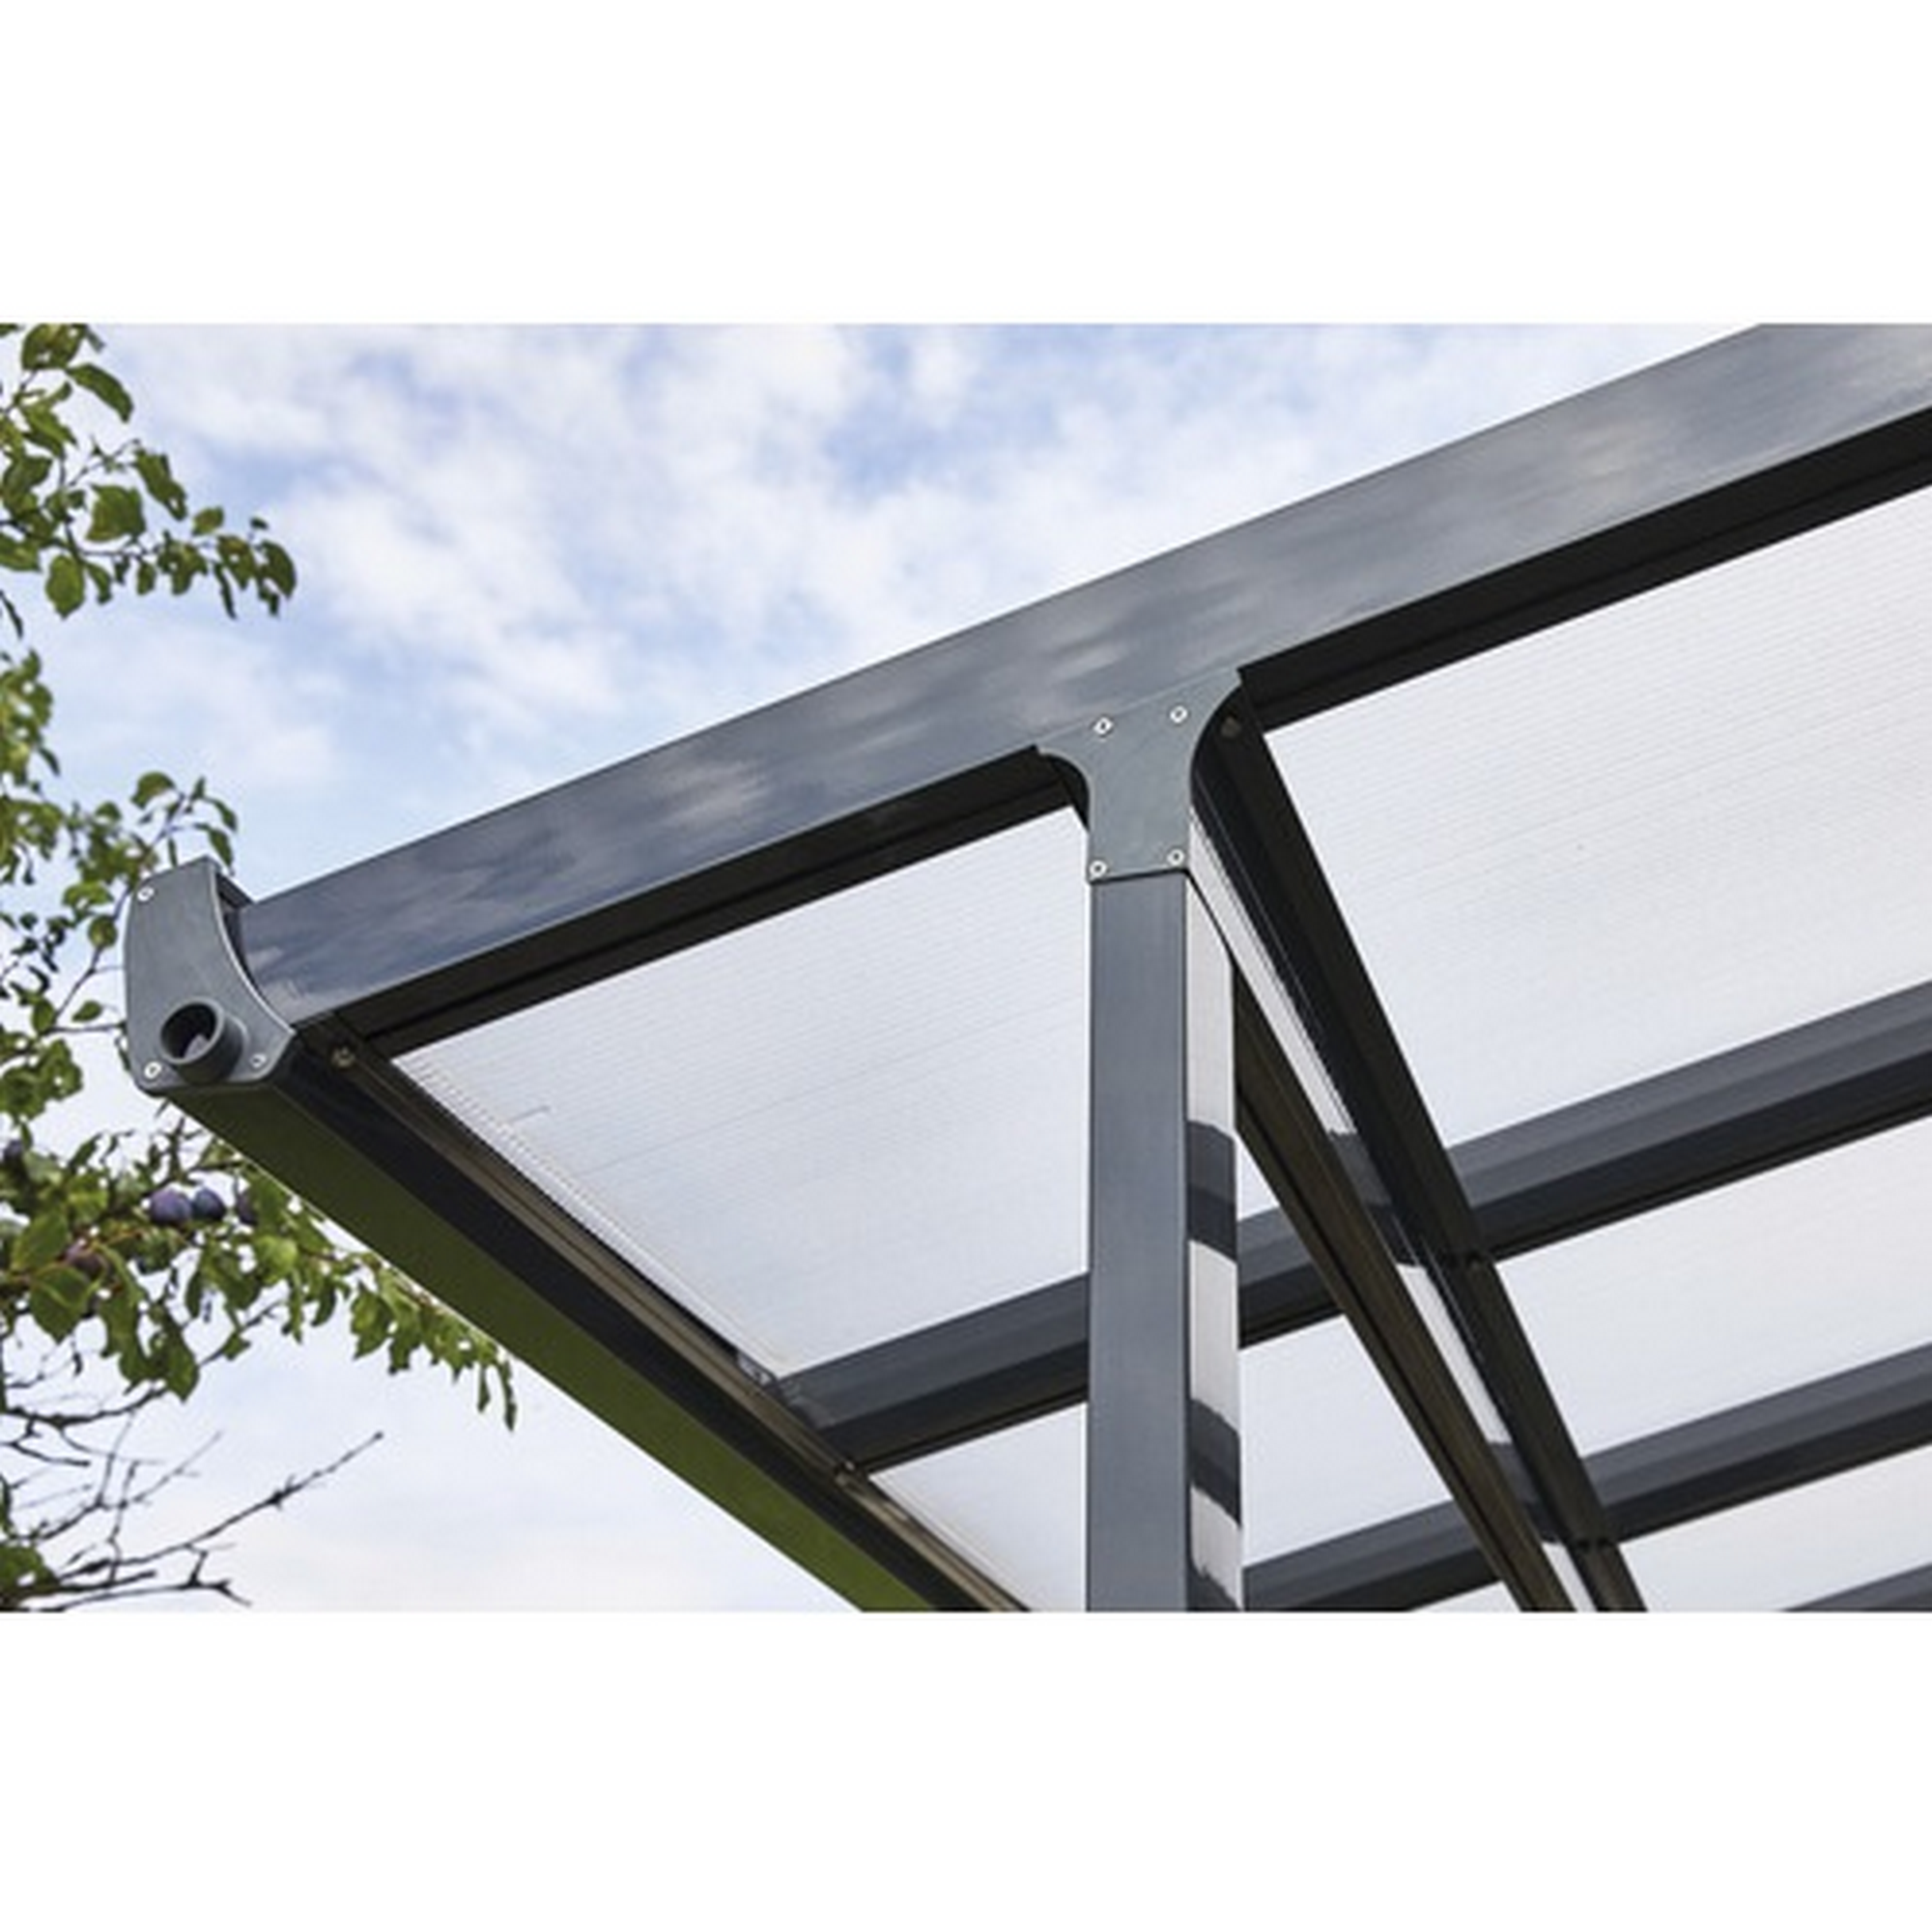 Terrassenüberdachung/Carport 'Typ F' 546 x 406 cm anthrazit + product picture